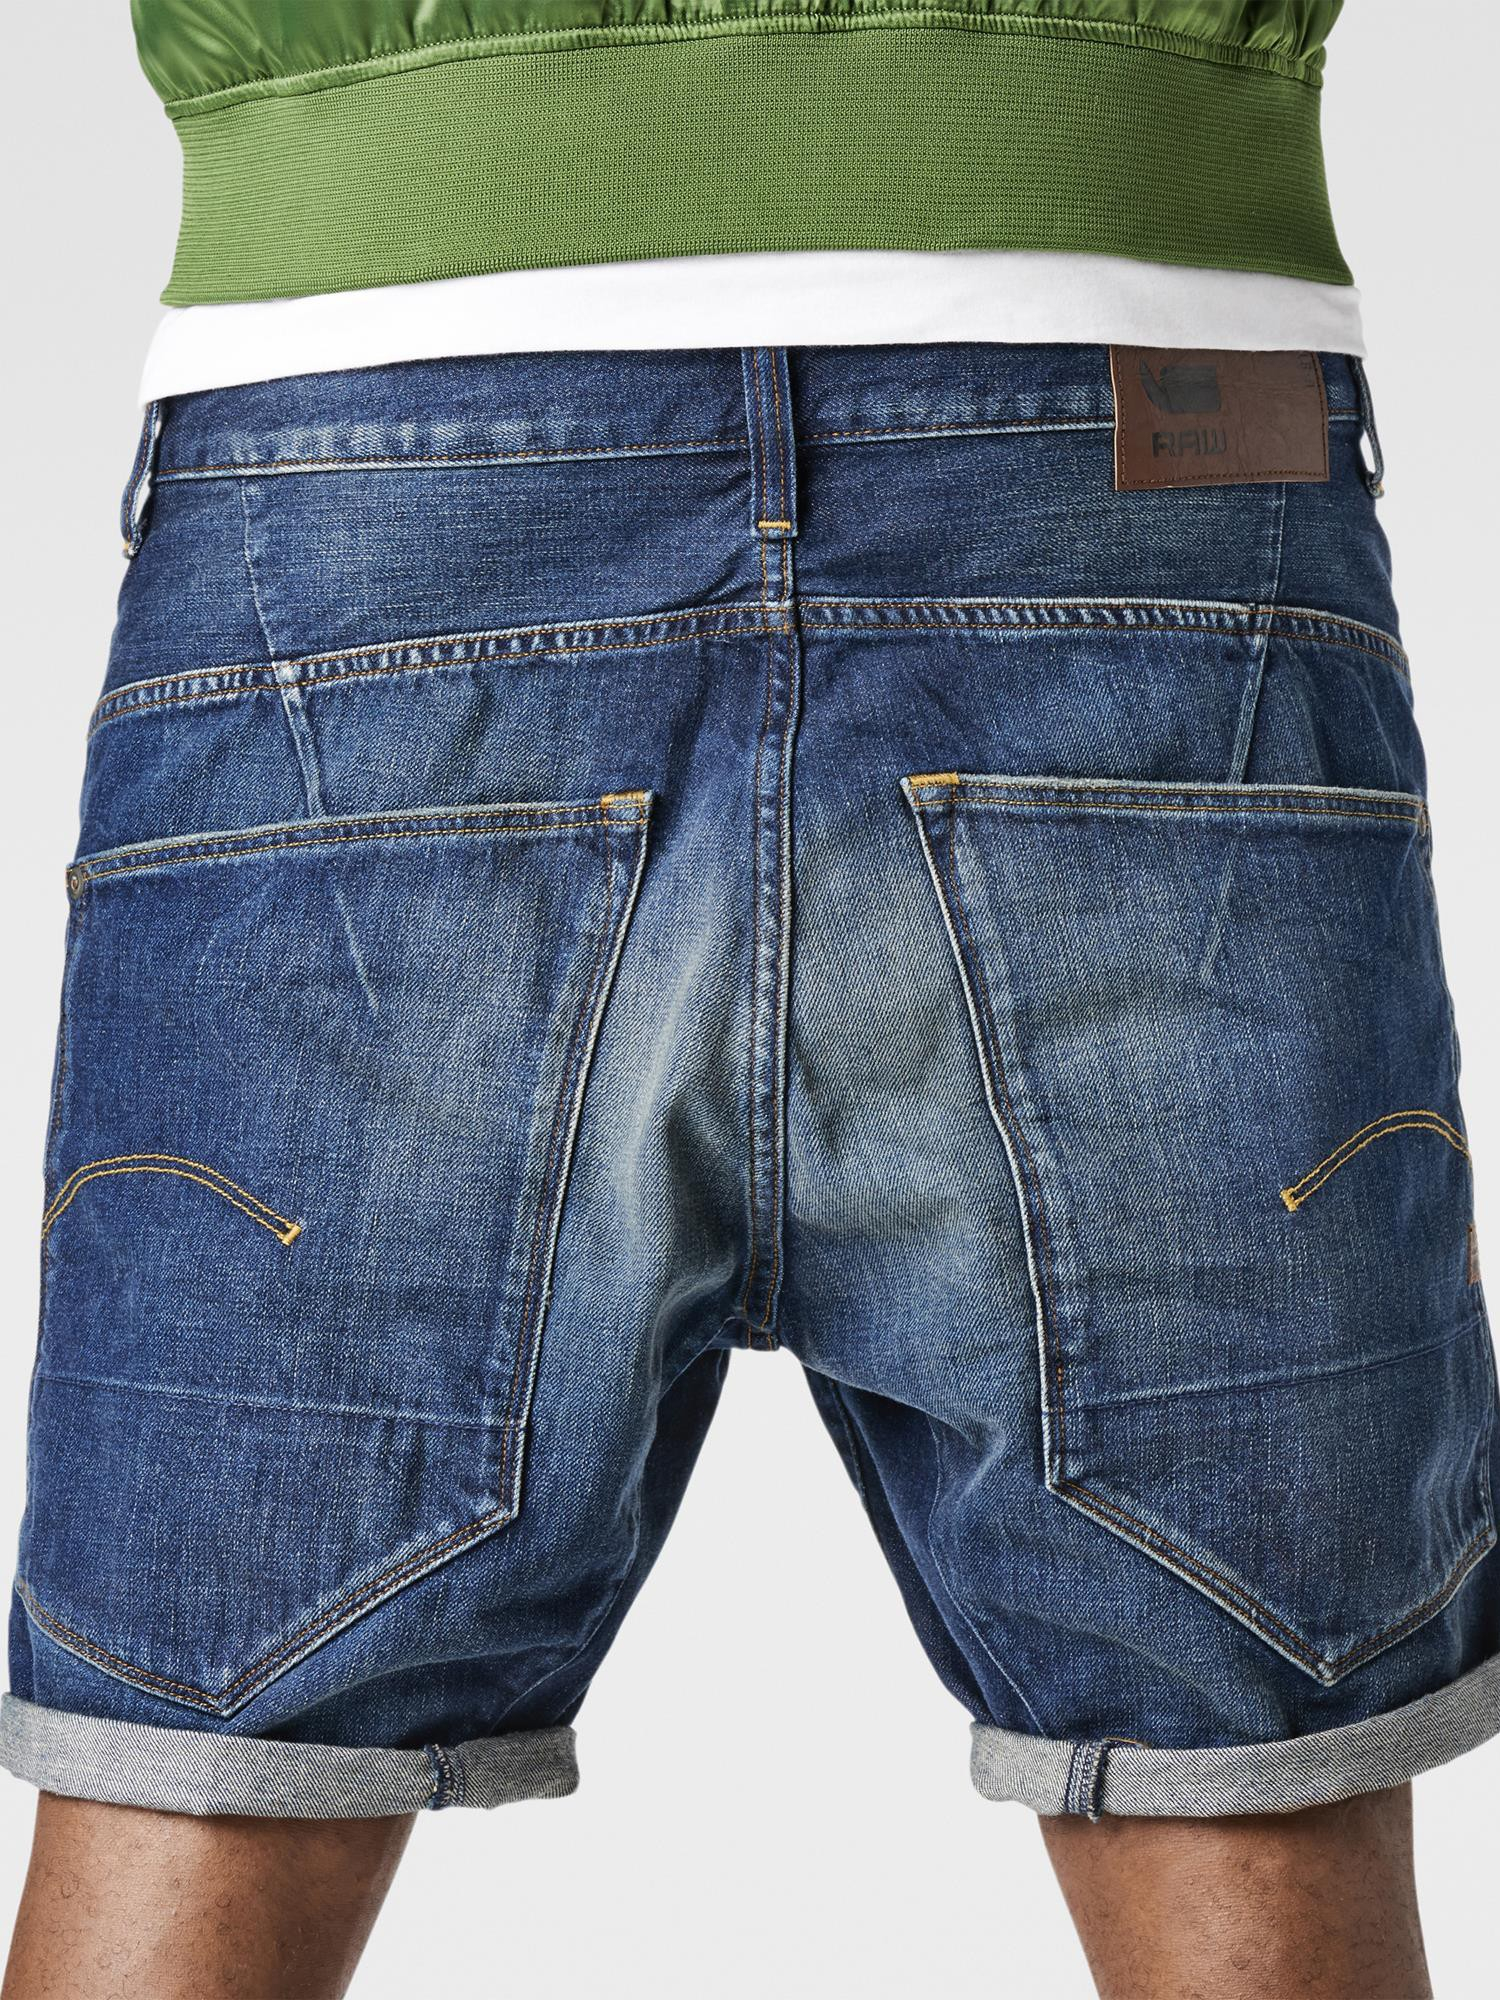 g star denim shorts,cheap - OFF 64% -socksensei.ae